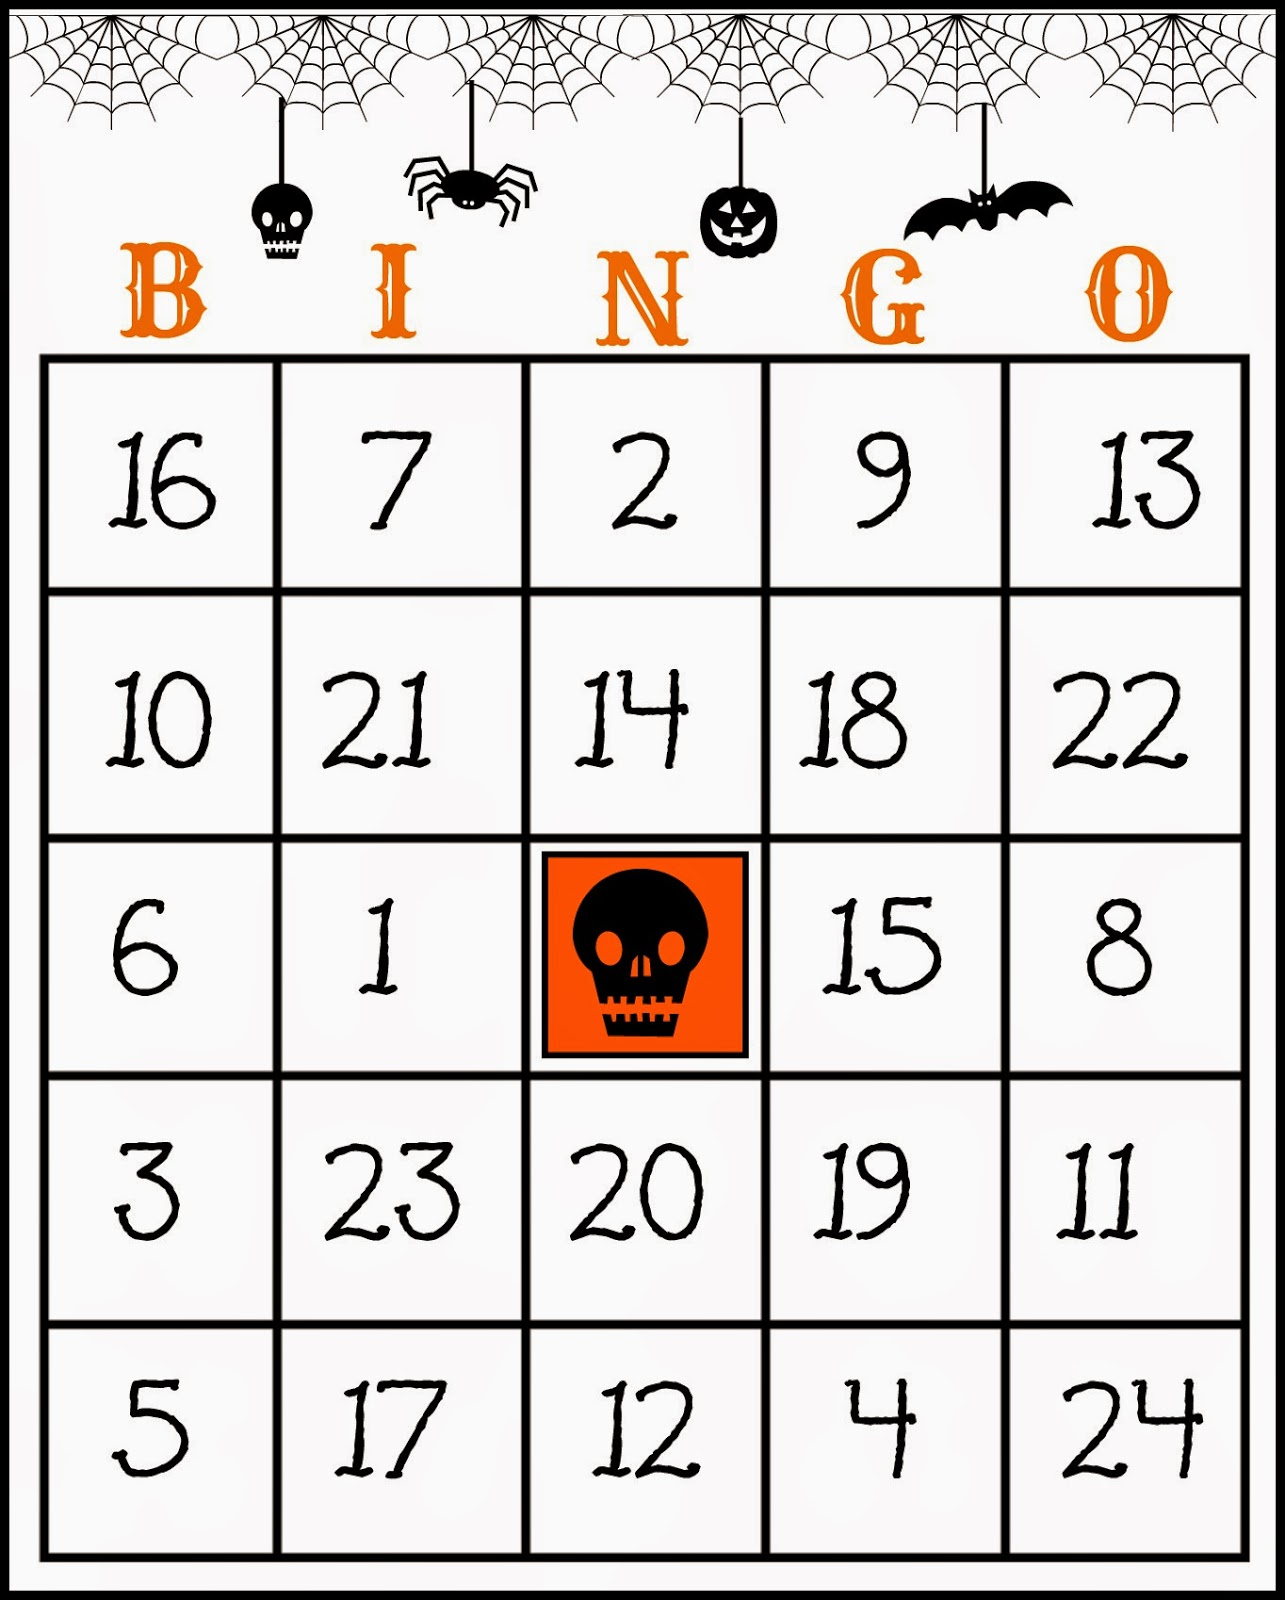 Crafty In Crosby: Free Printable Halloween Bingo Game - Free Printable Halloween Bingo Cards